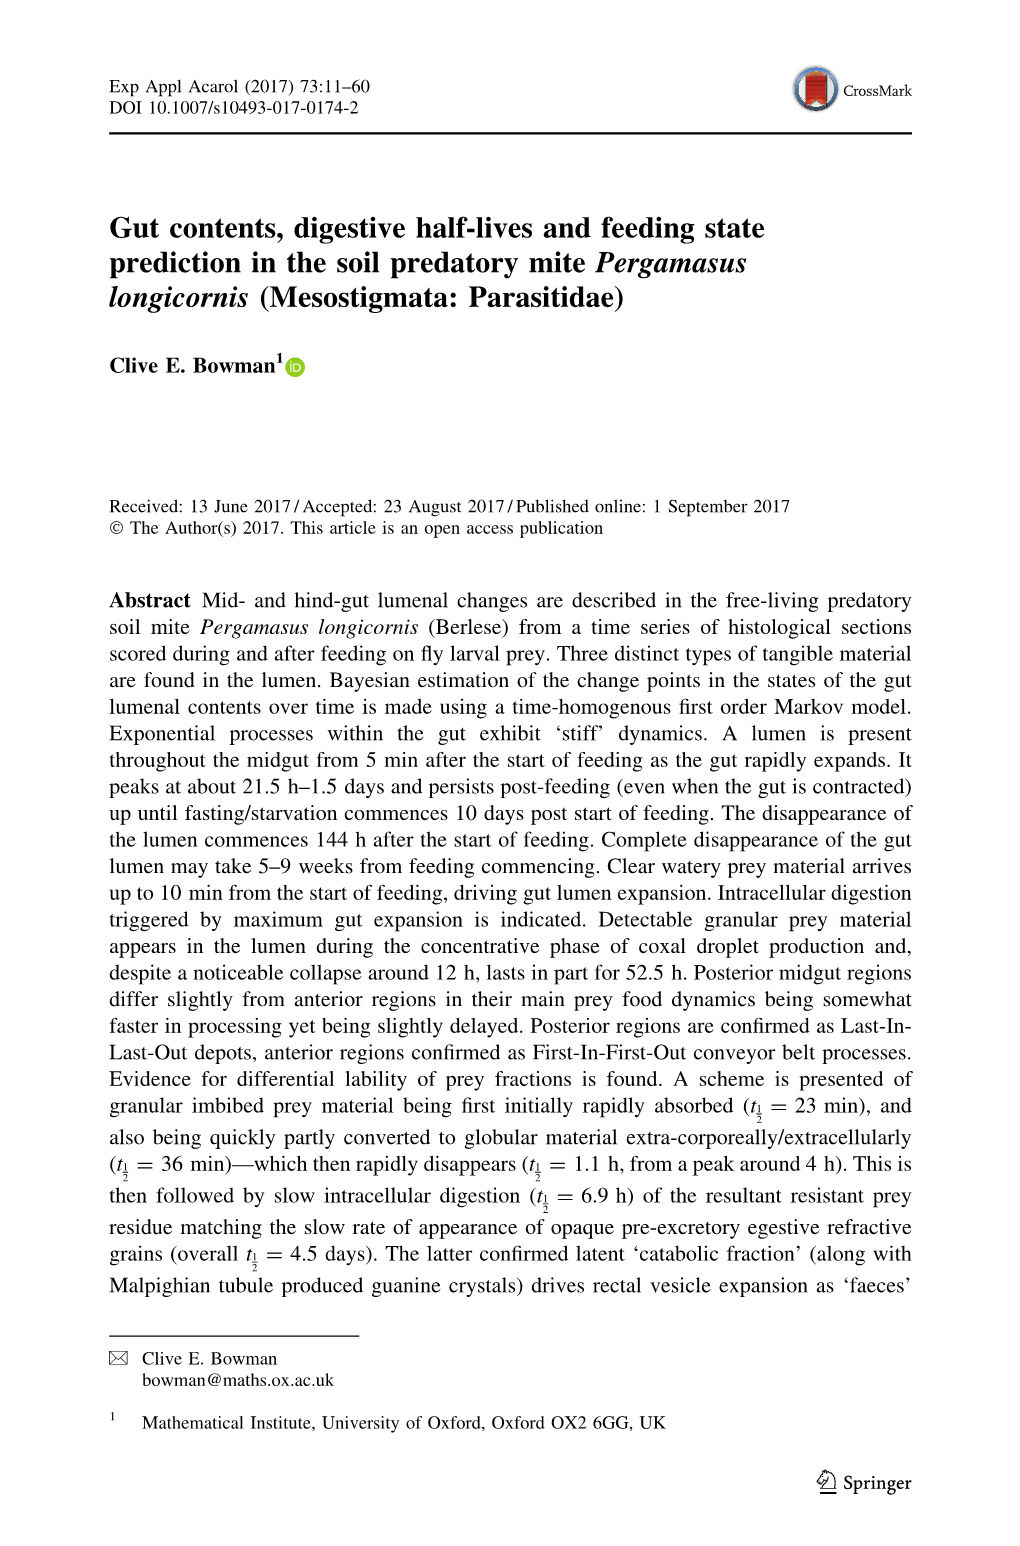 Gut Contents, Digestive Half-Lives and Feeding State Prediction in the Soil Predatory Mite Pergamasus Longicornis (Mesostigmata: Parasitidae)